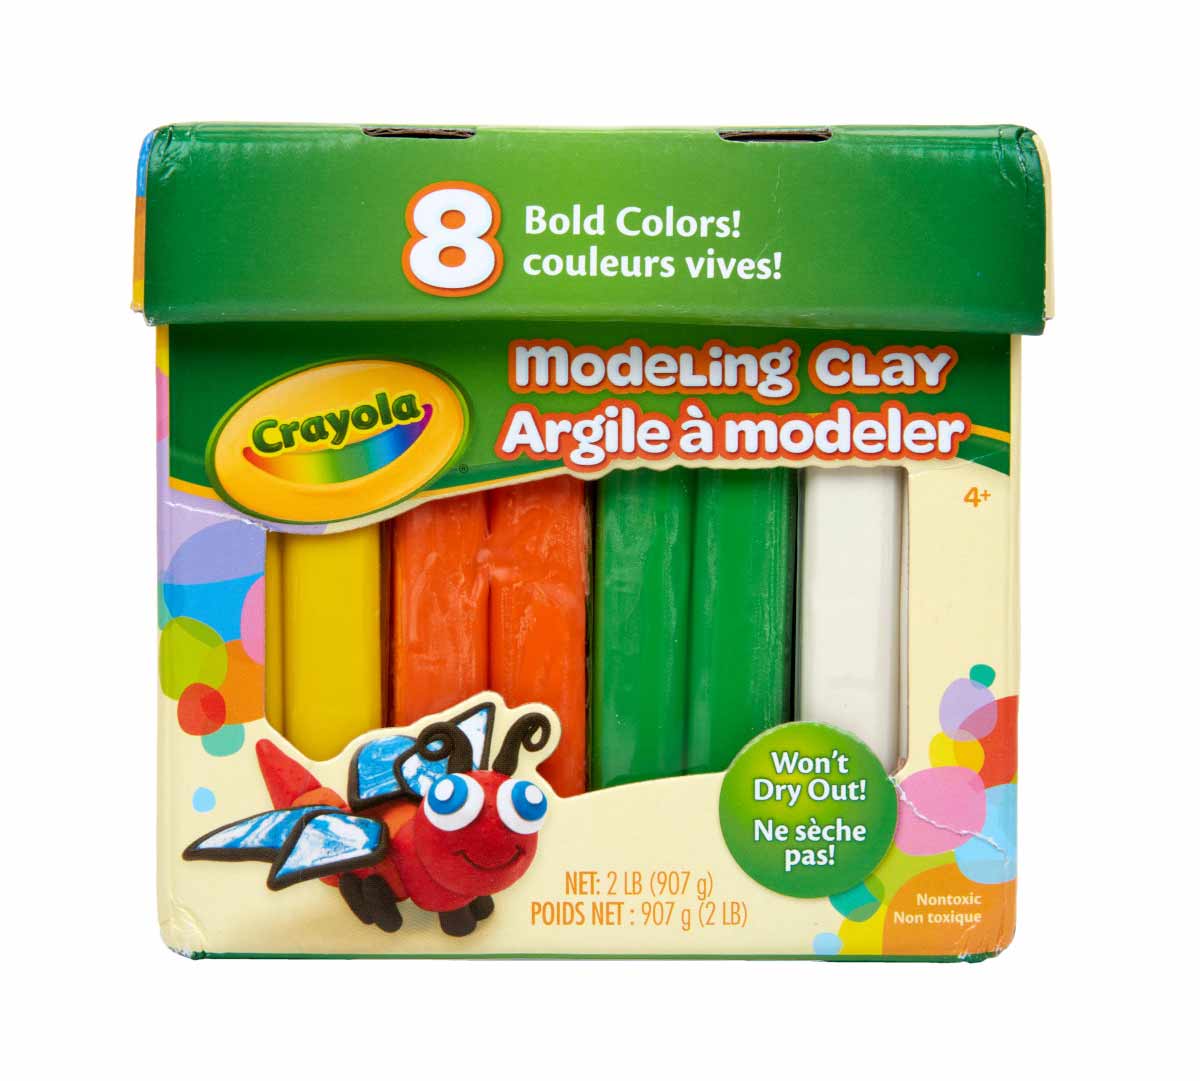 Crayola Modeling Clay, 8 Bold Colors, Crayola.com